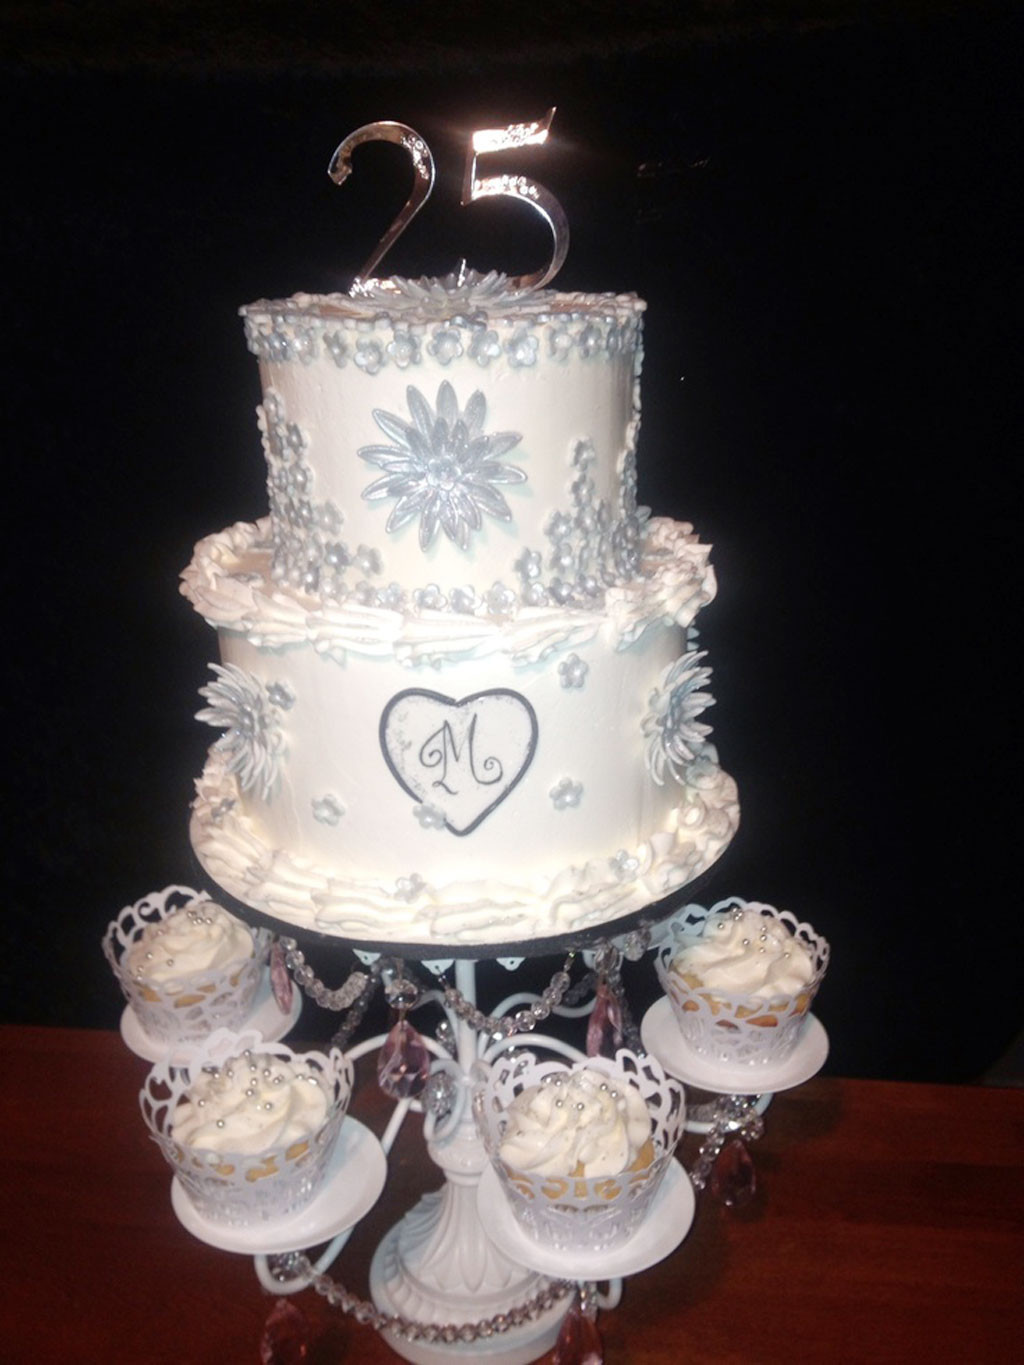 25th Wedding Anniversary Cakes
 25th Wedding Anniversary Cake Cake Ideas by Prayface